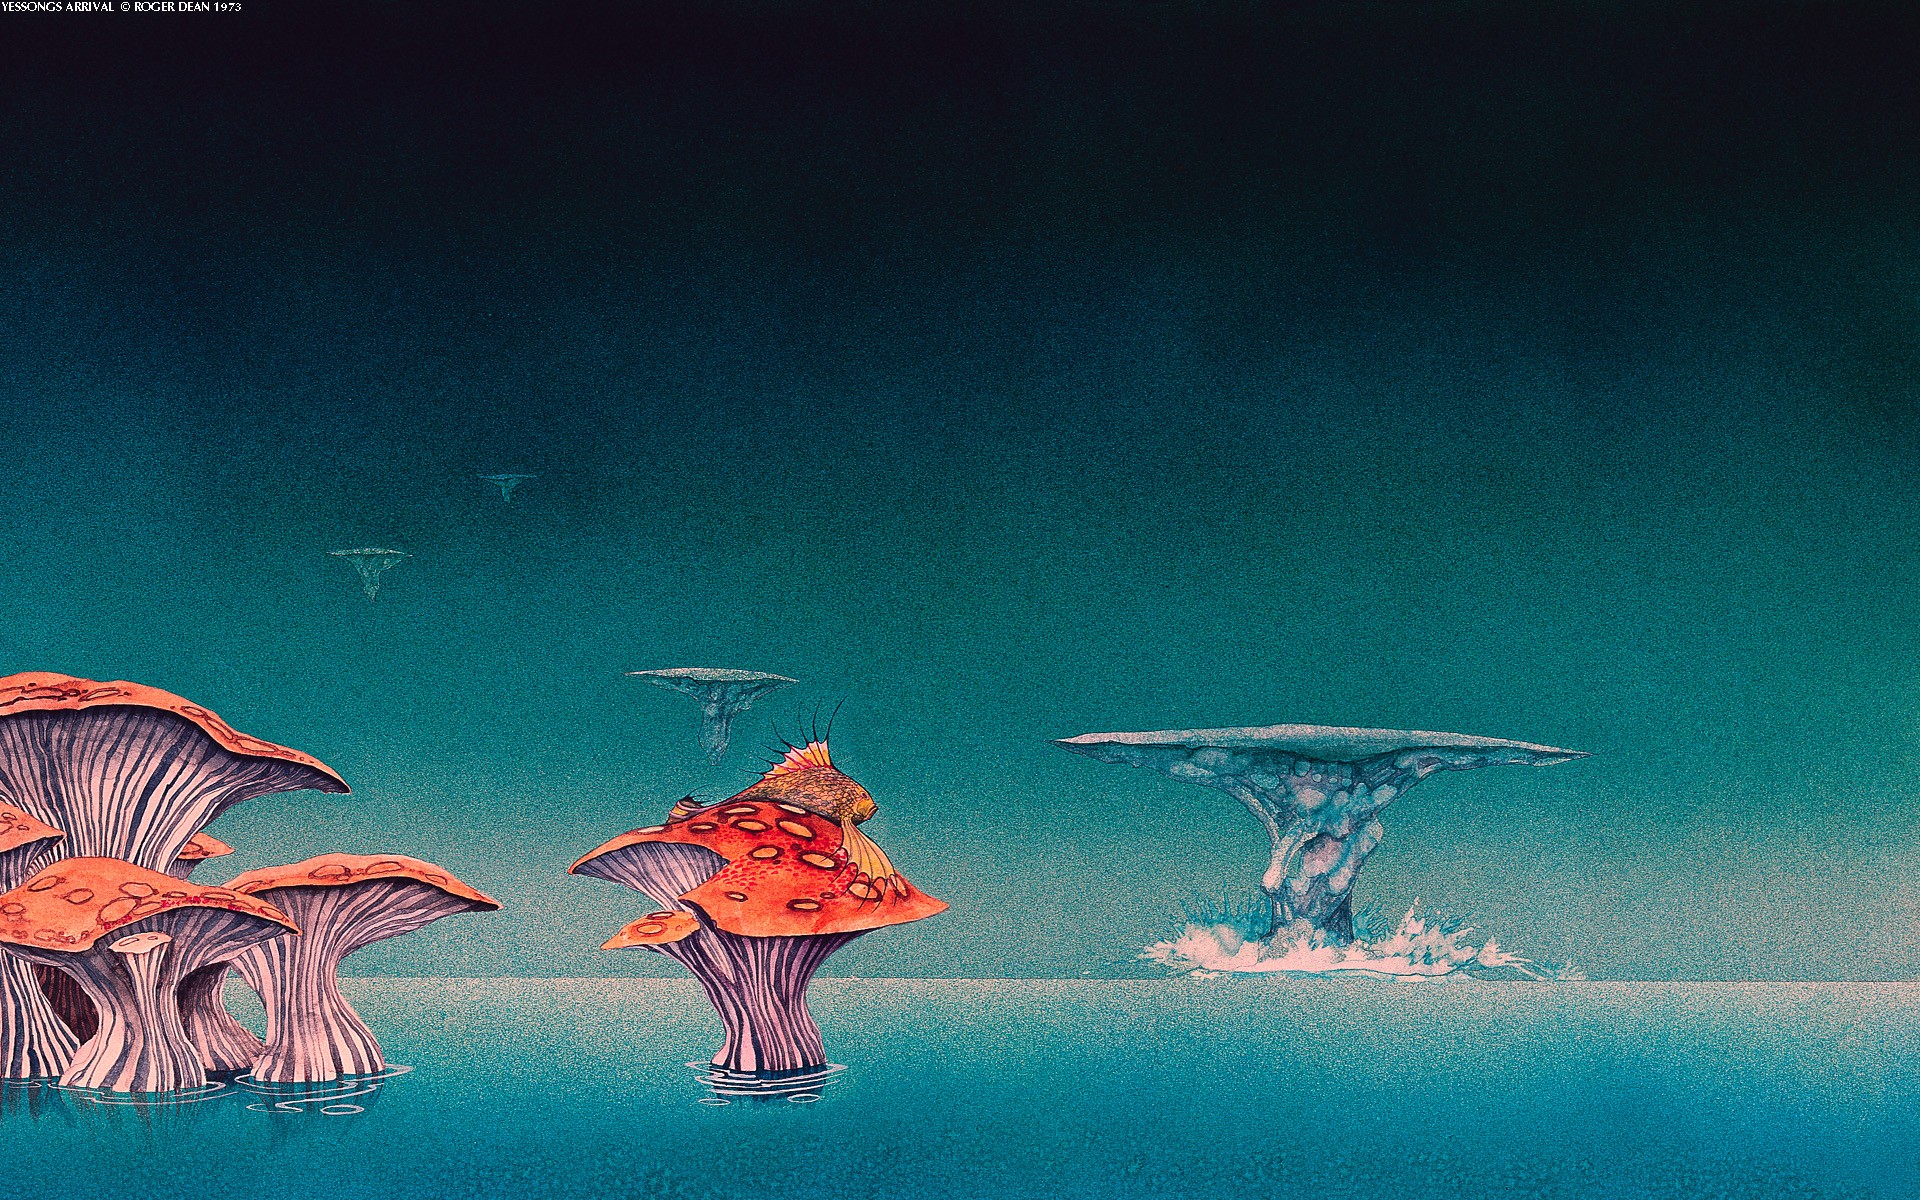 Landscape Artwork Fantasy Art Mushroom Sea Water Fish Science Fiction Roger Dean 1920x1200